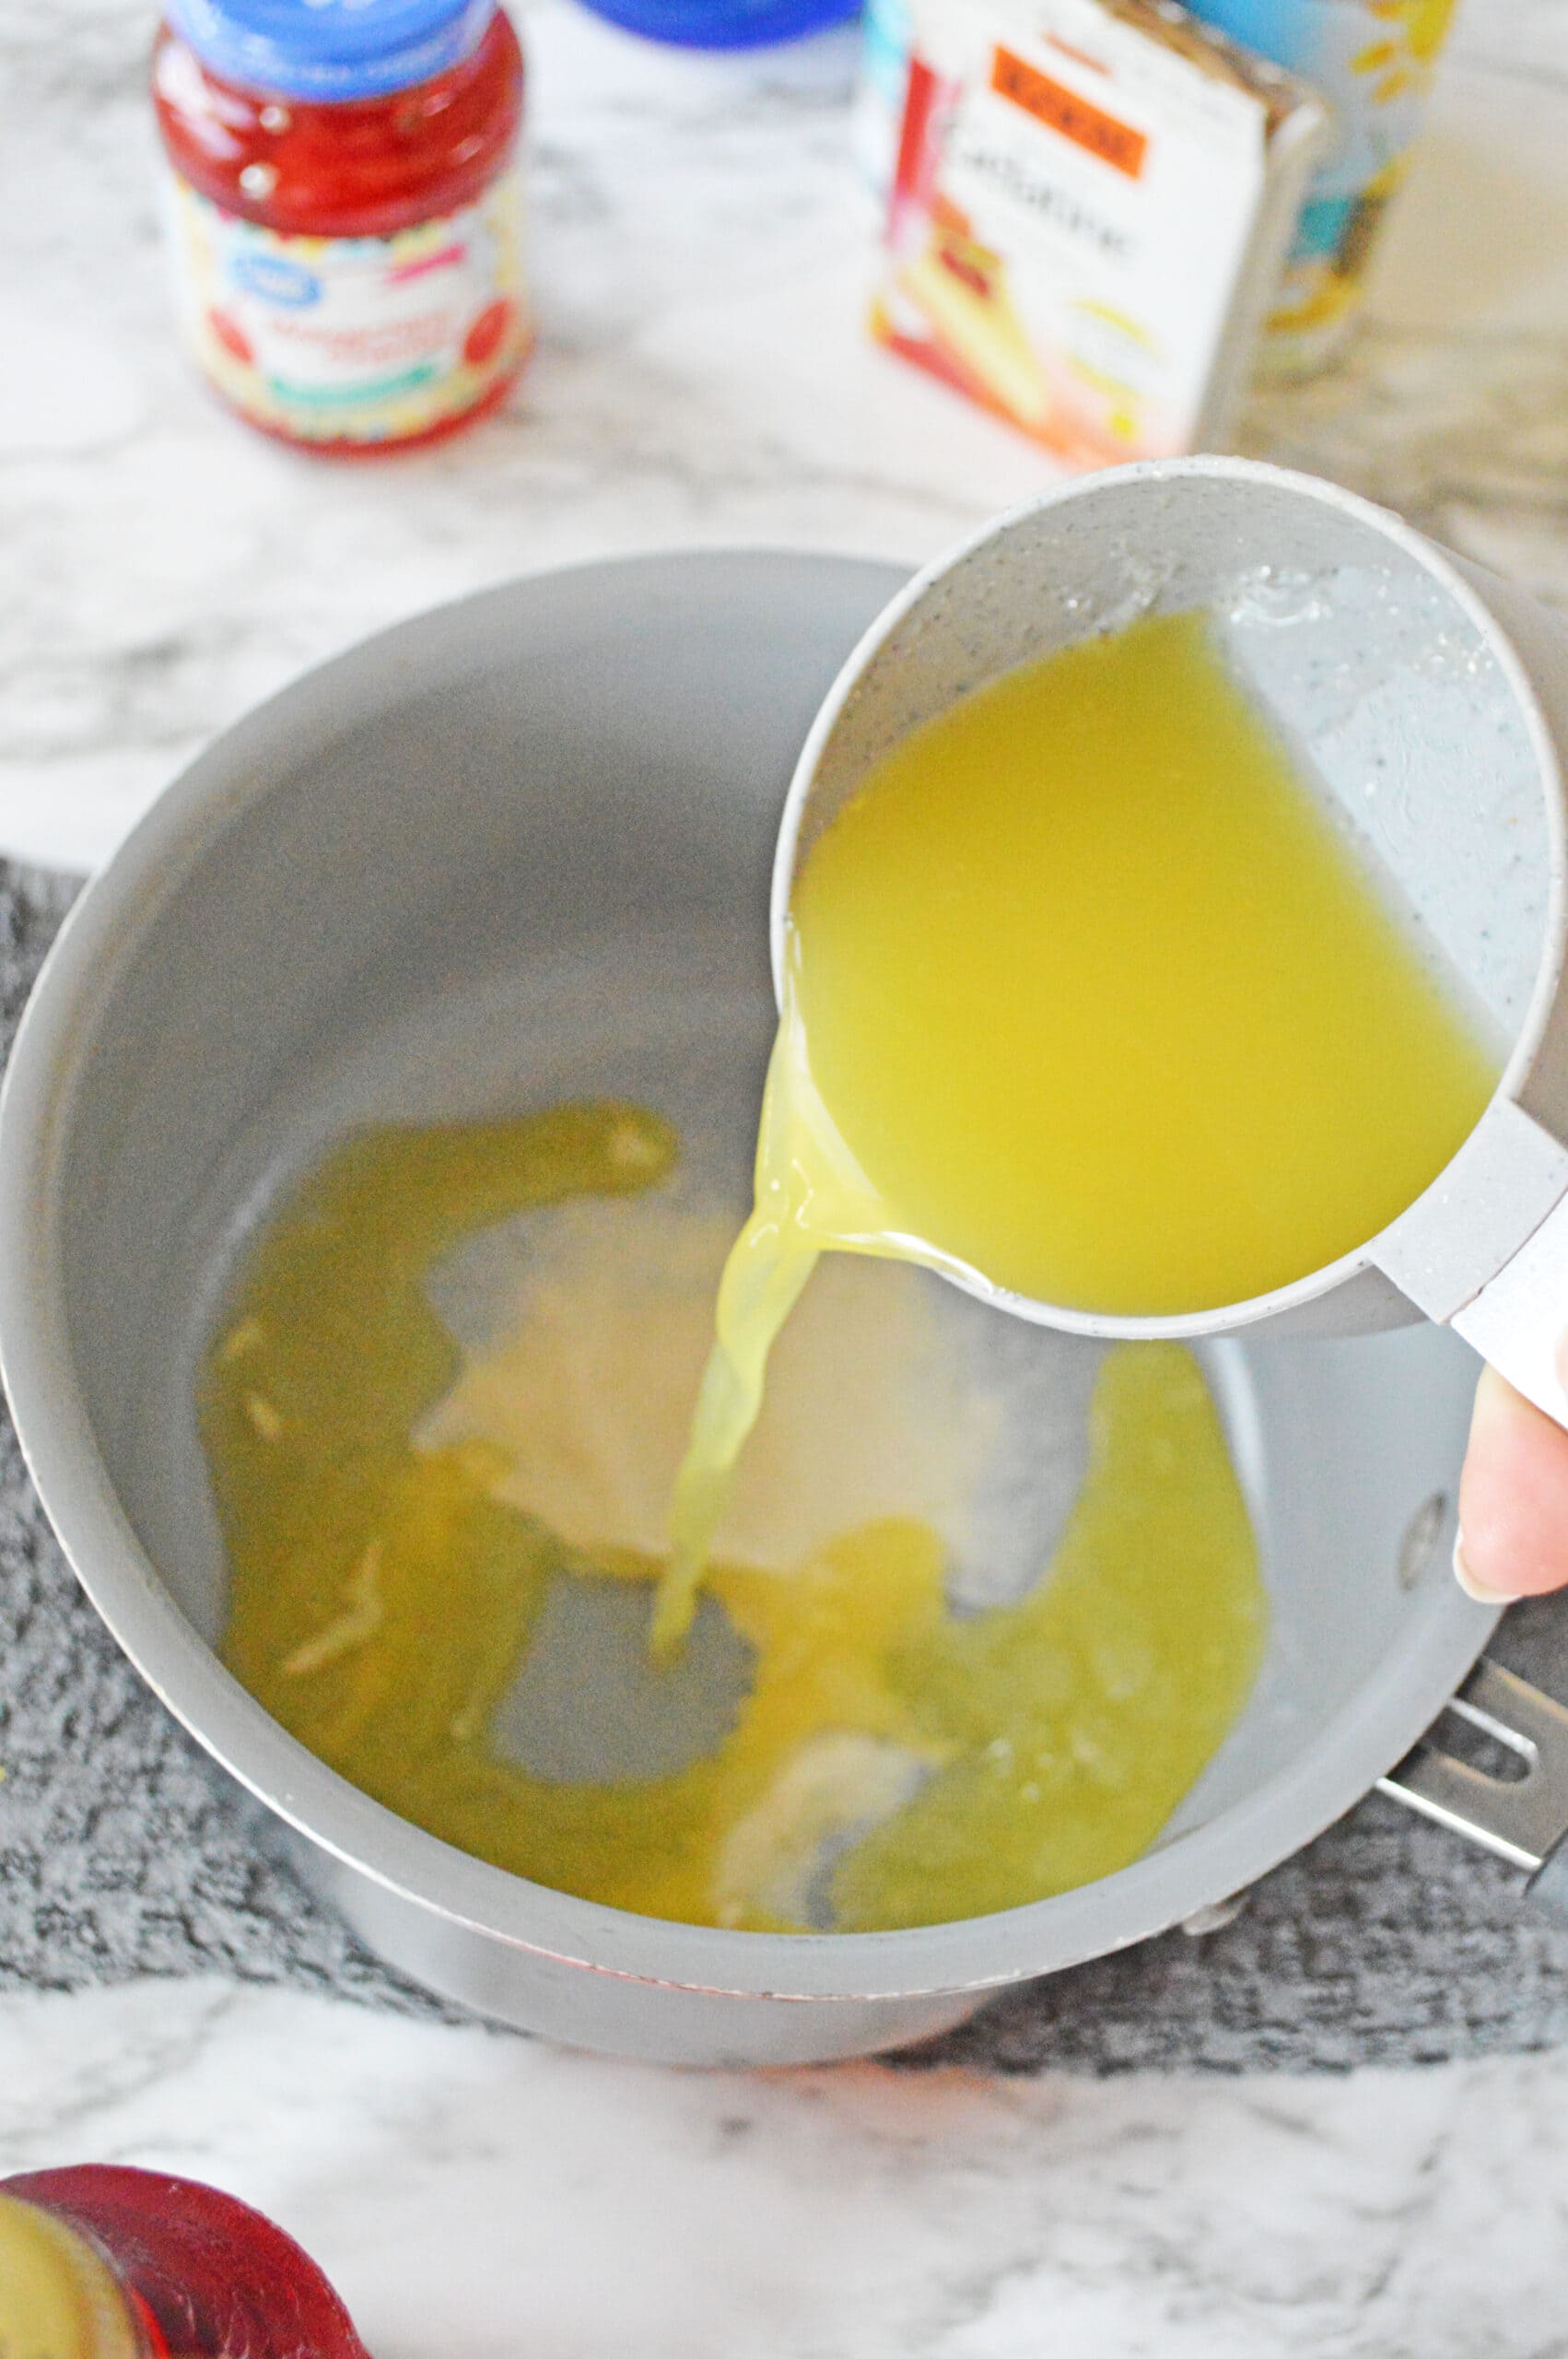 Adding pineapple juice to saucepan